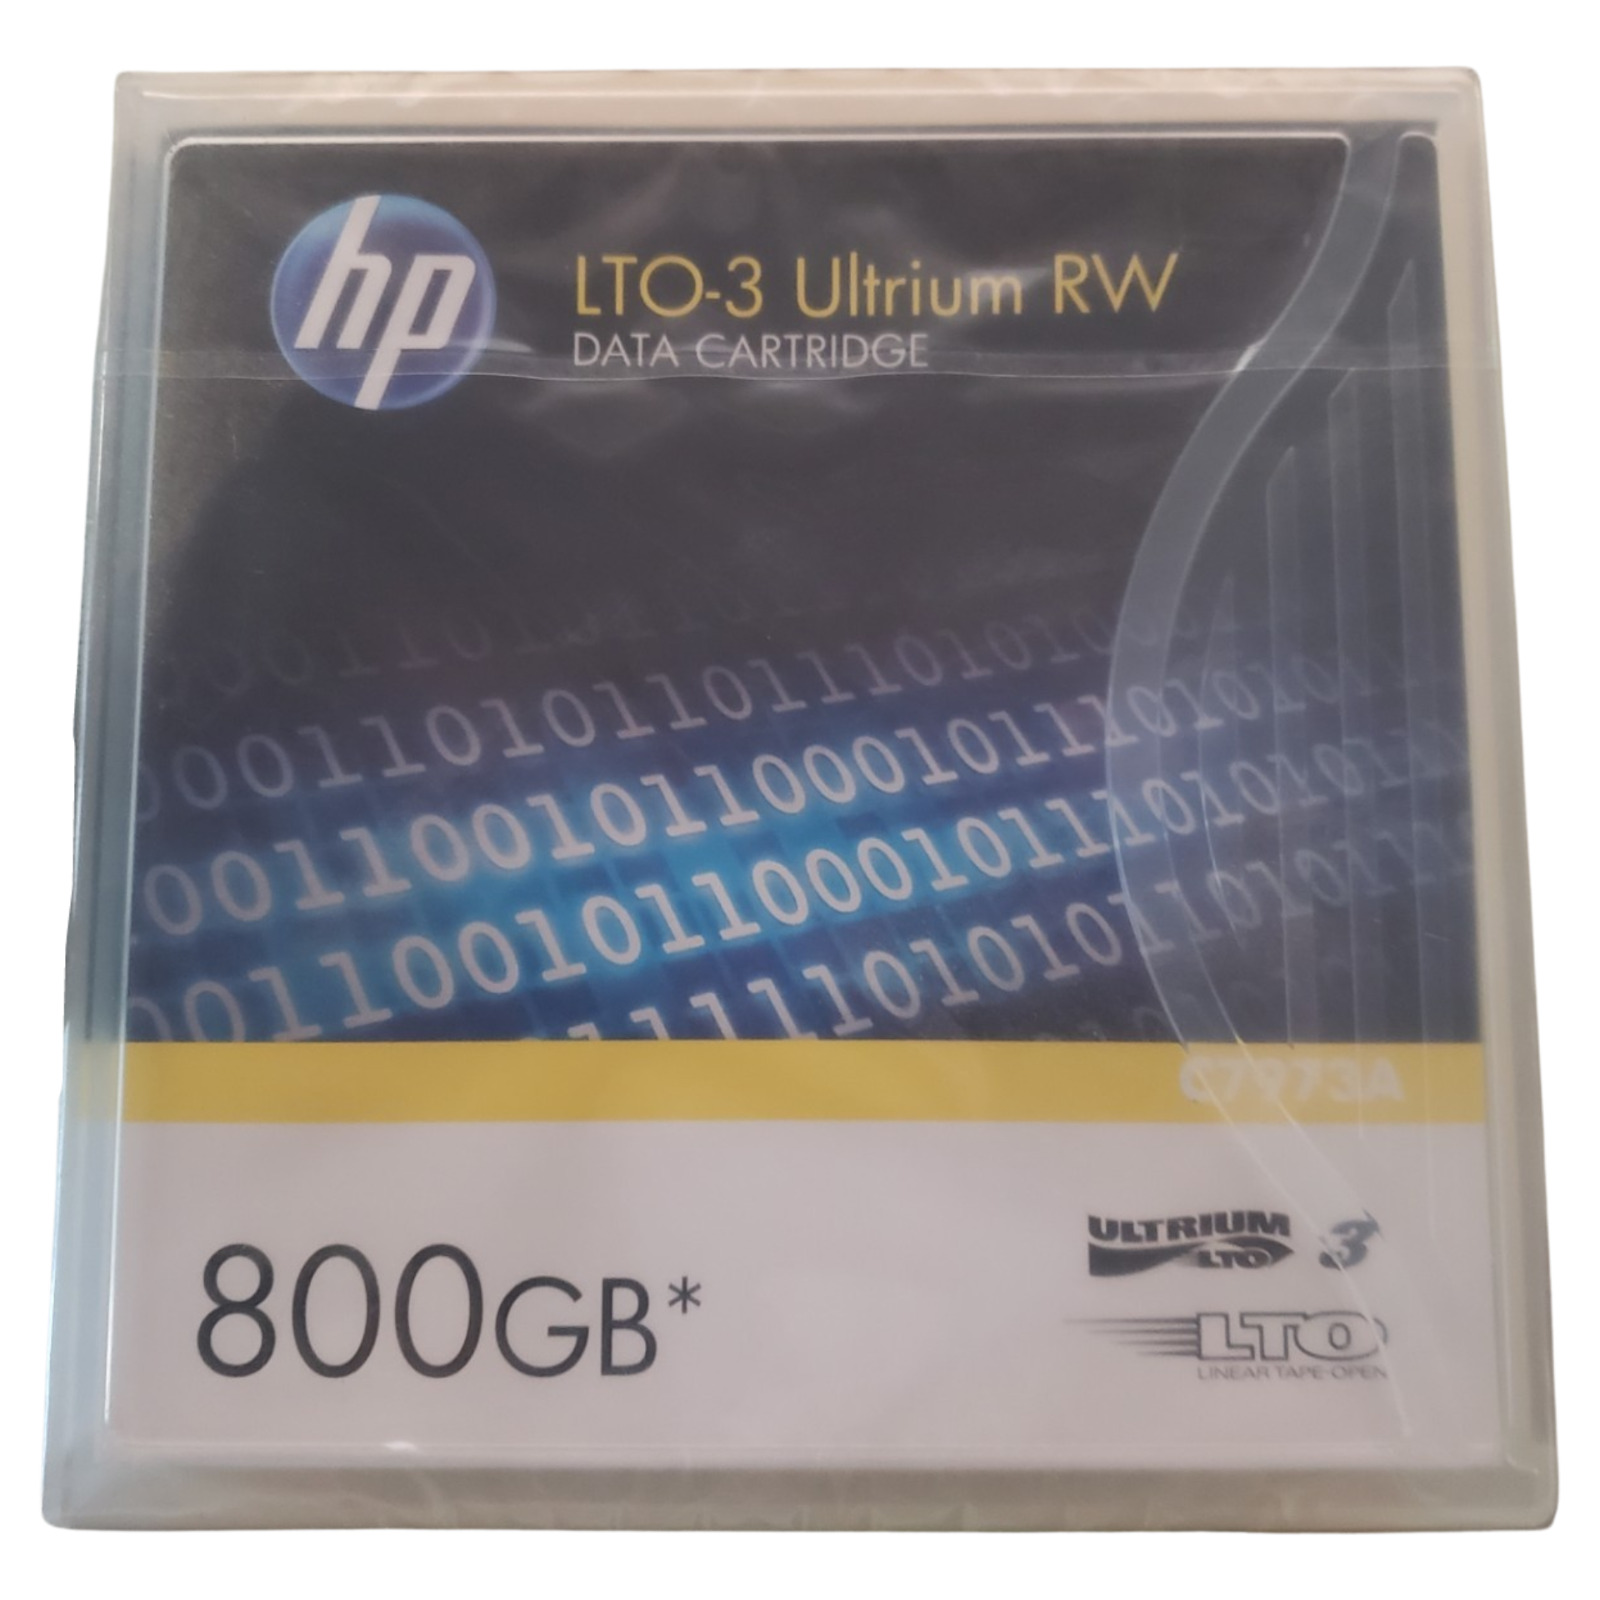 LOT OF 6 HP LTO-3 ULTRIUM RW DATA CARTRIDGE 800GB C7973A